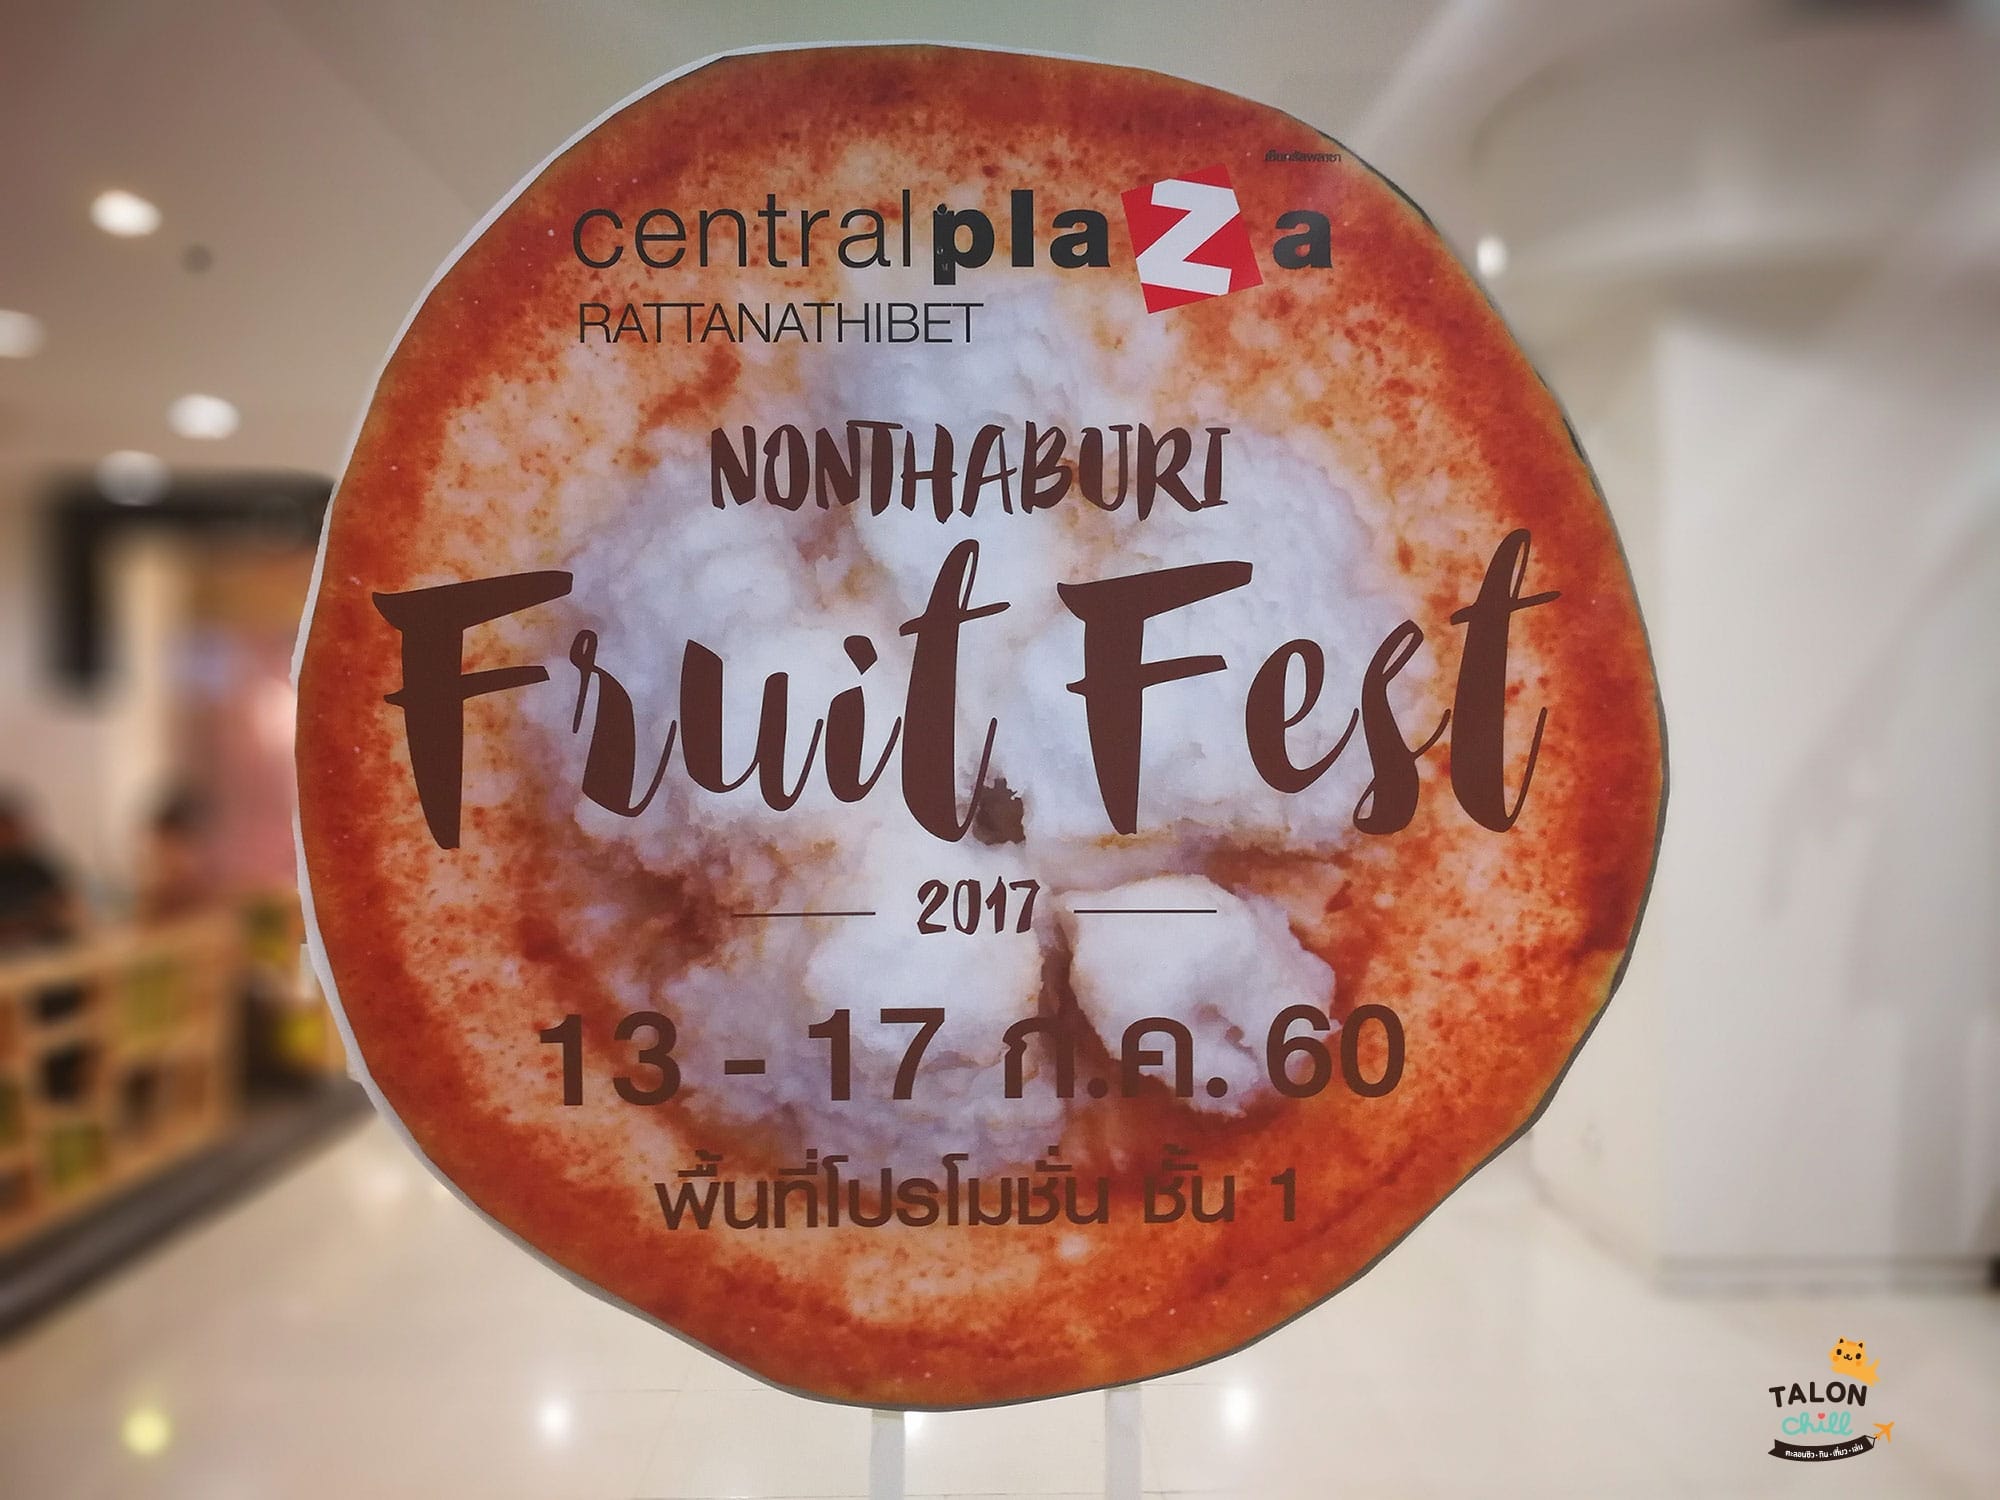 Nonthaburi Fruit Fest 2017 centralplaza rattanathibet 19